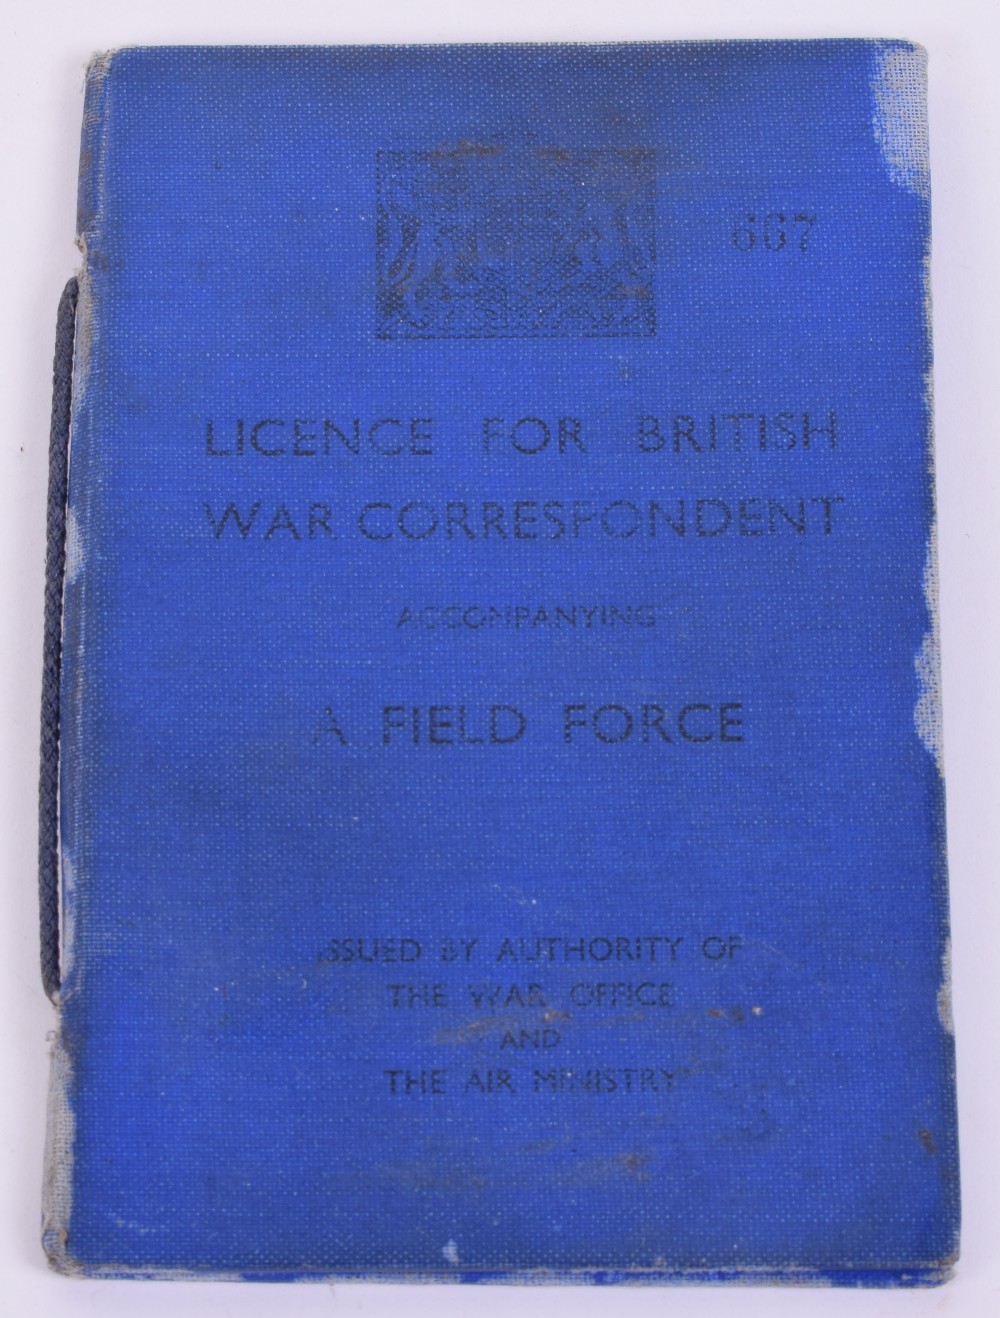 WW2 British War Correspondents License, blue printed cloth covered license / identity document